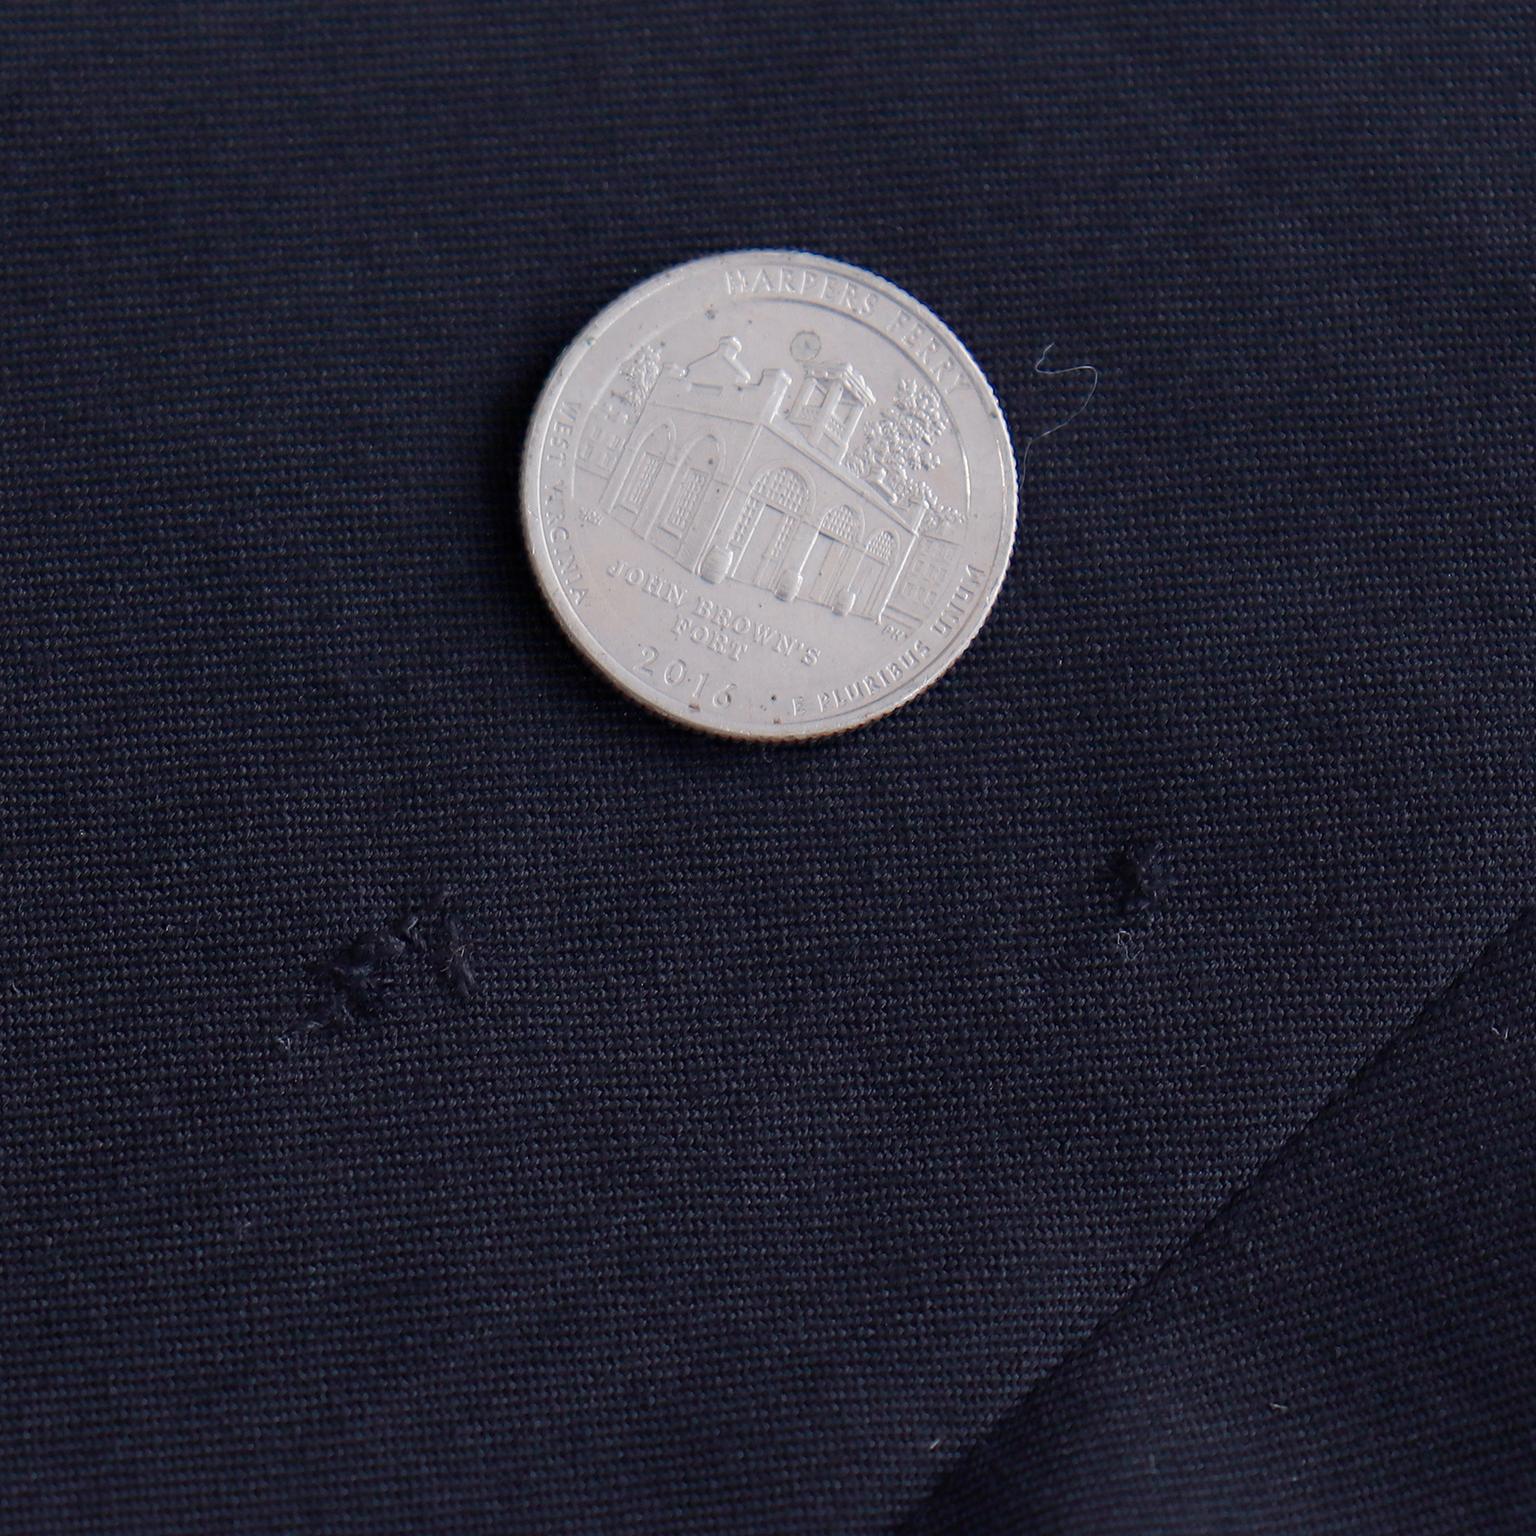 Yohji Yamamoto Black Wool Tuxedo Style Jacket W Zipper Button Holes & Pockets For Sale 10